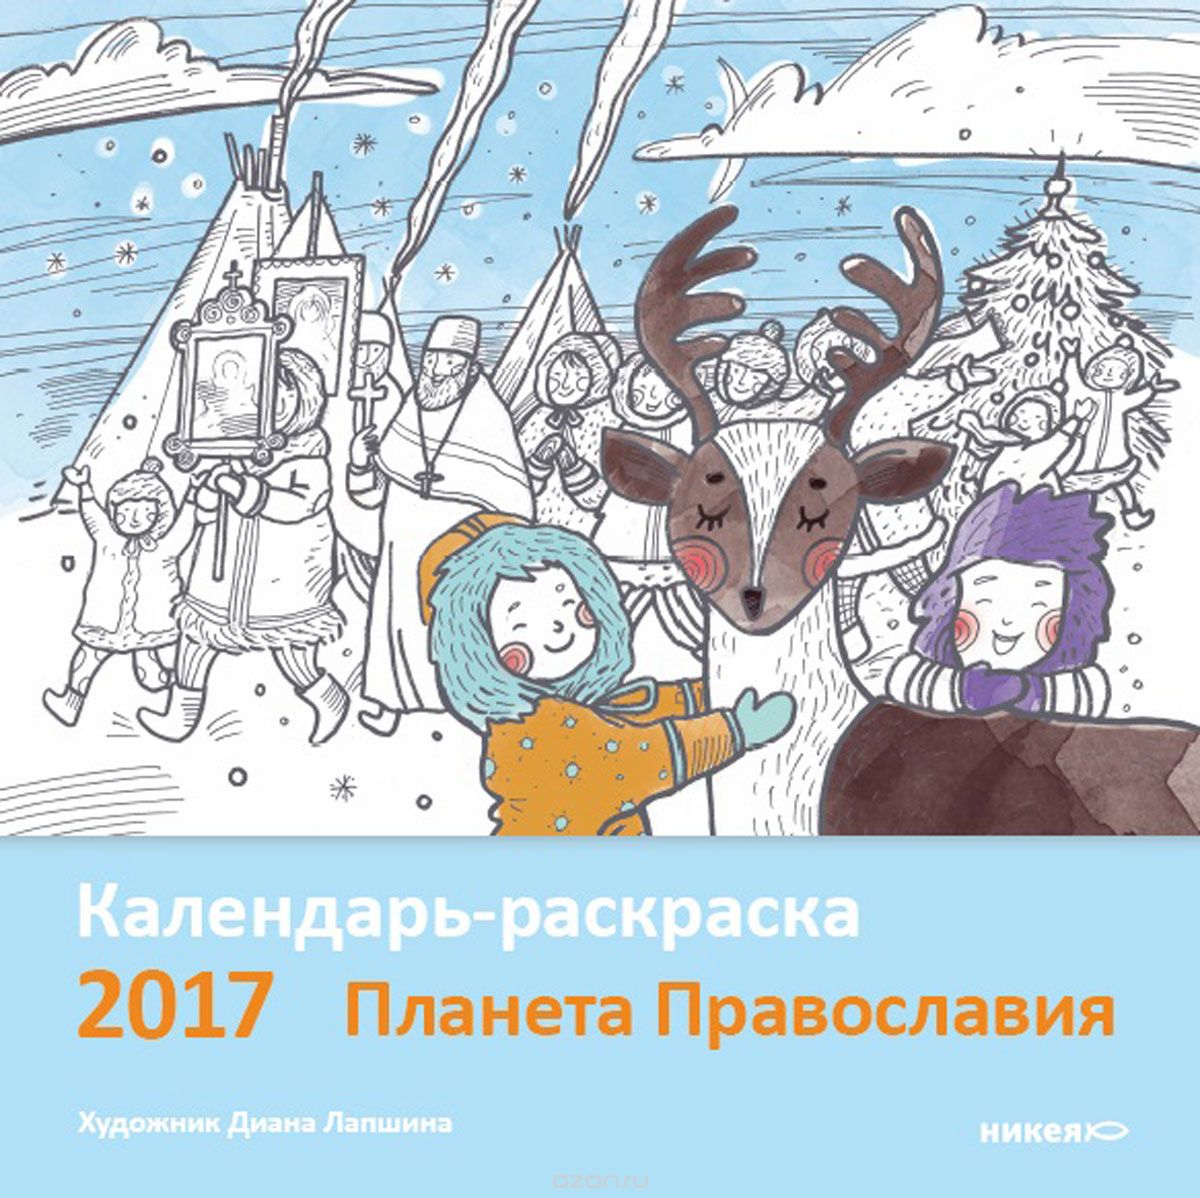 Календарь-раскраска 2017. Планета Православия